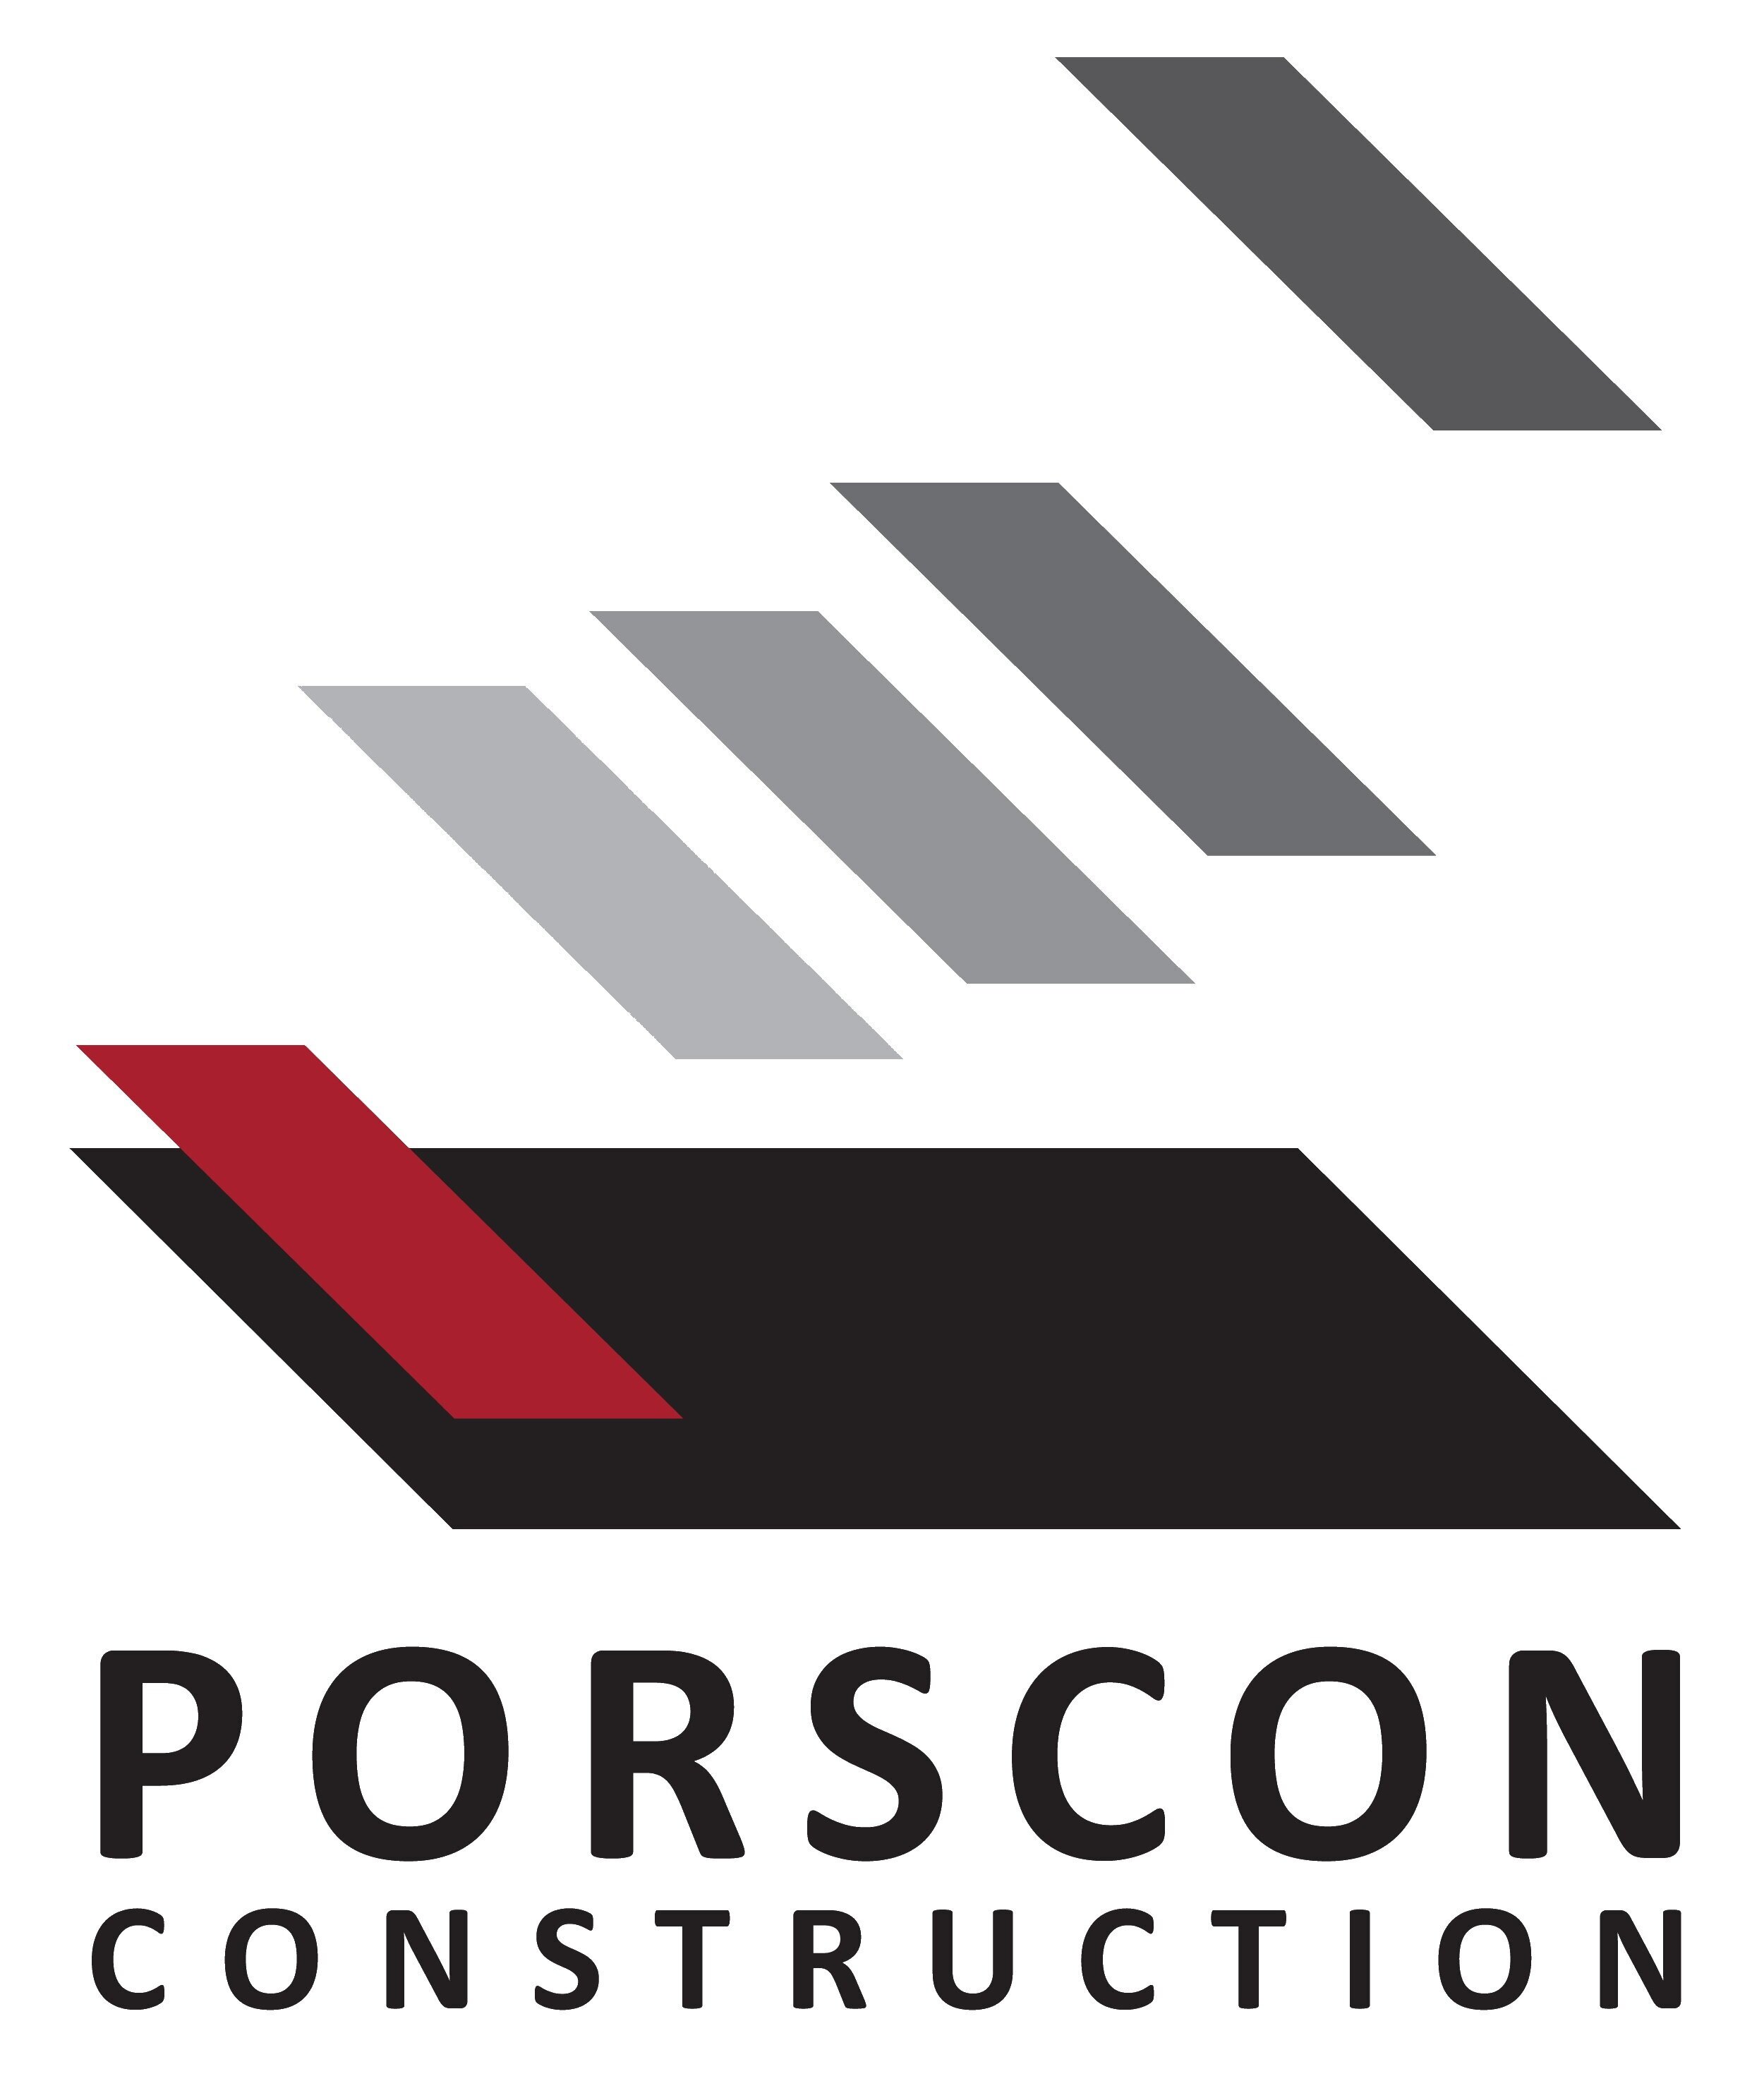 Porscon Construction - Edmonton commercial general contractor